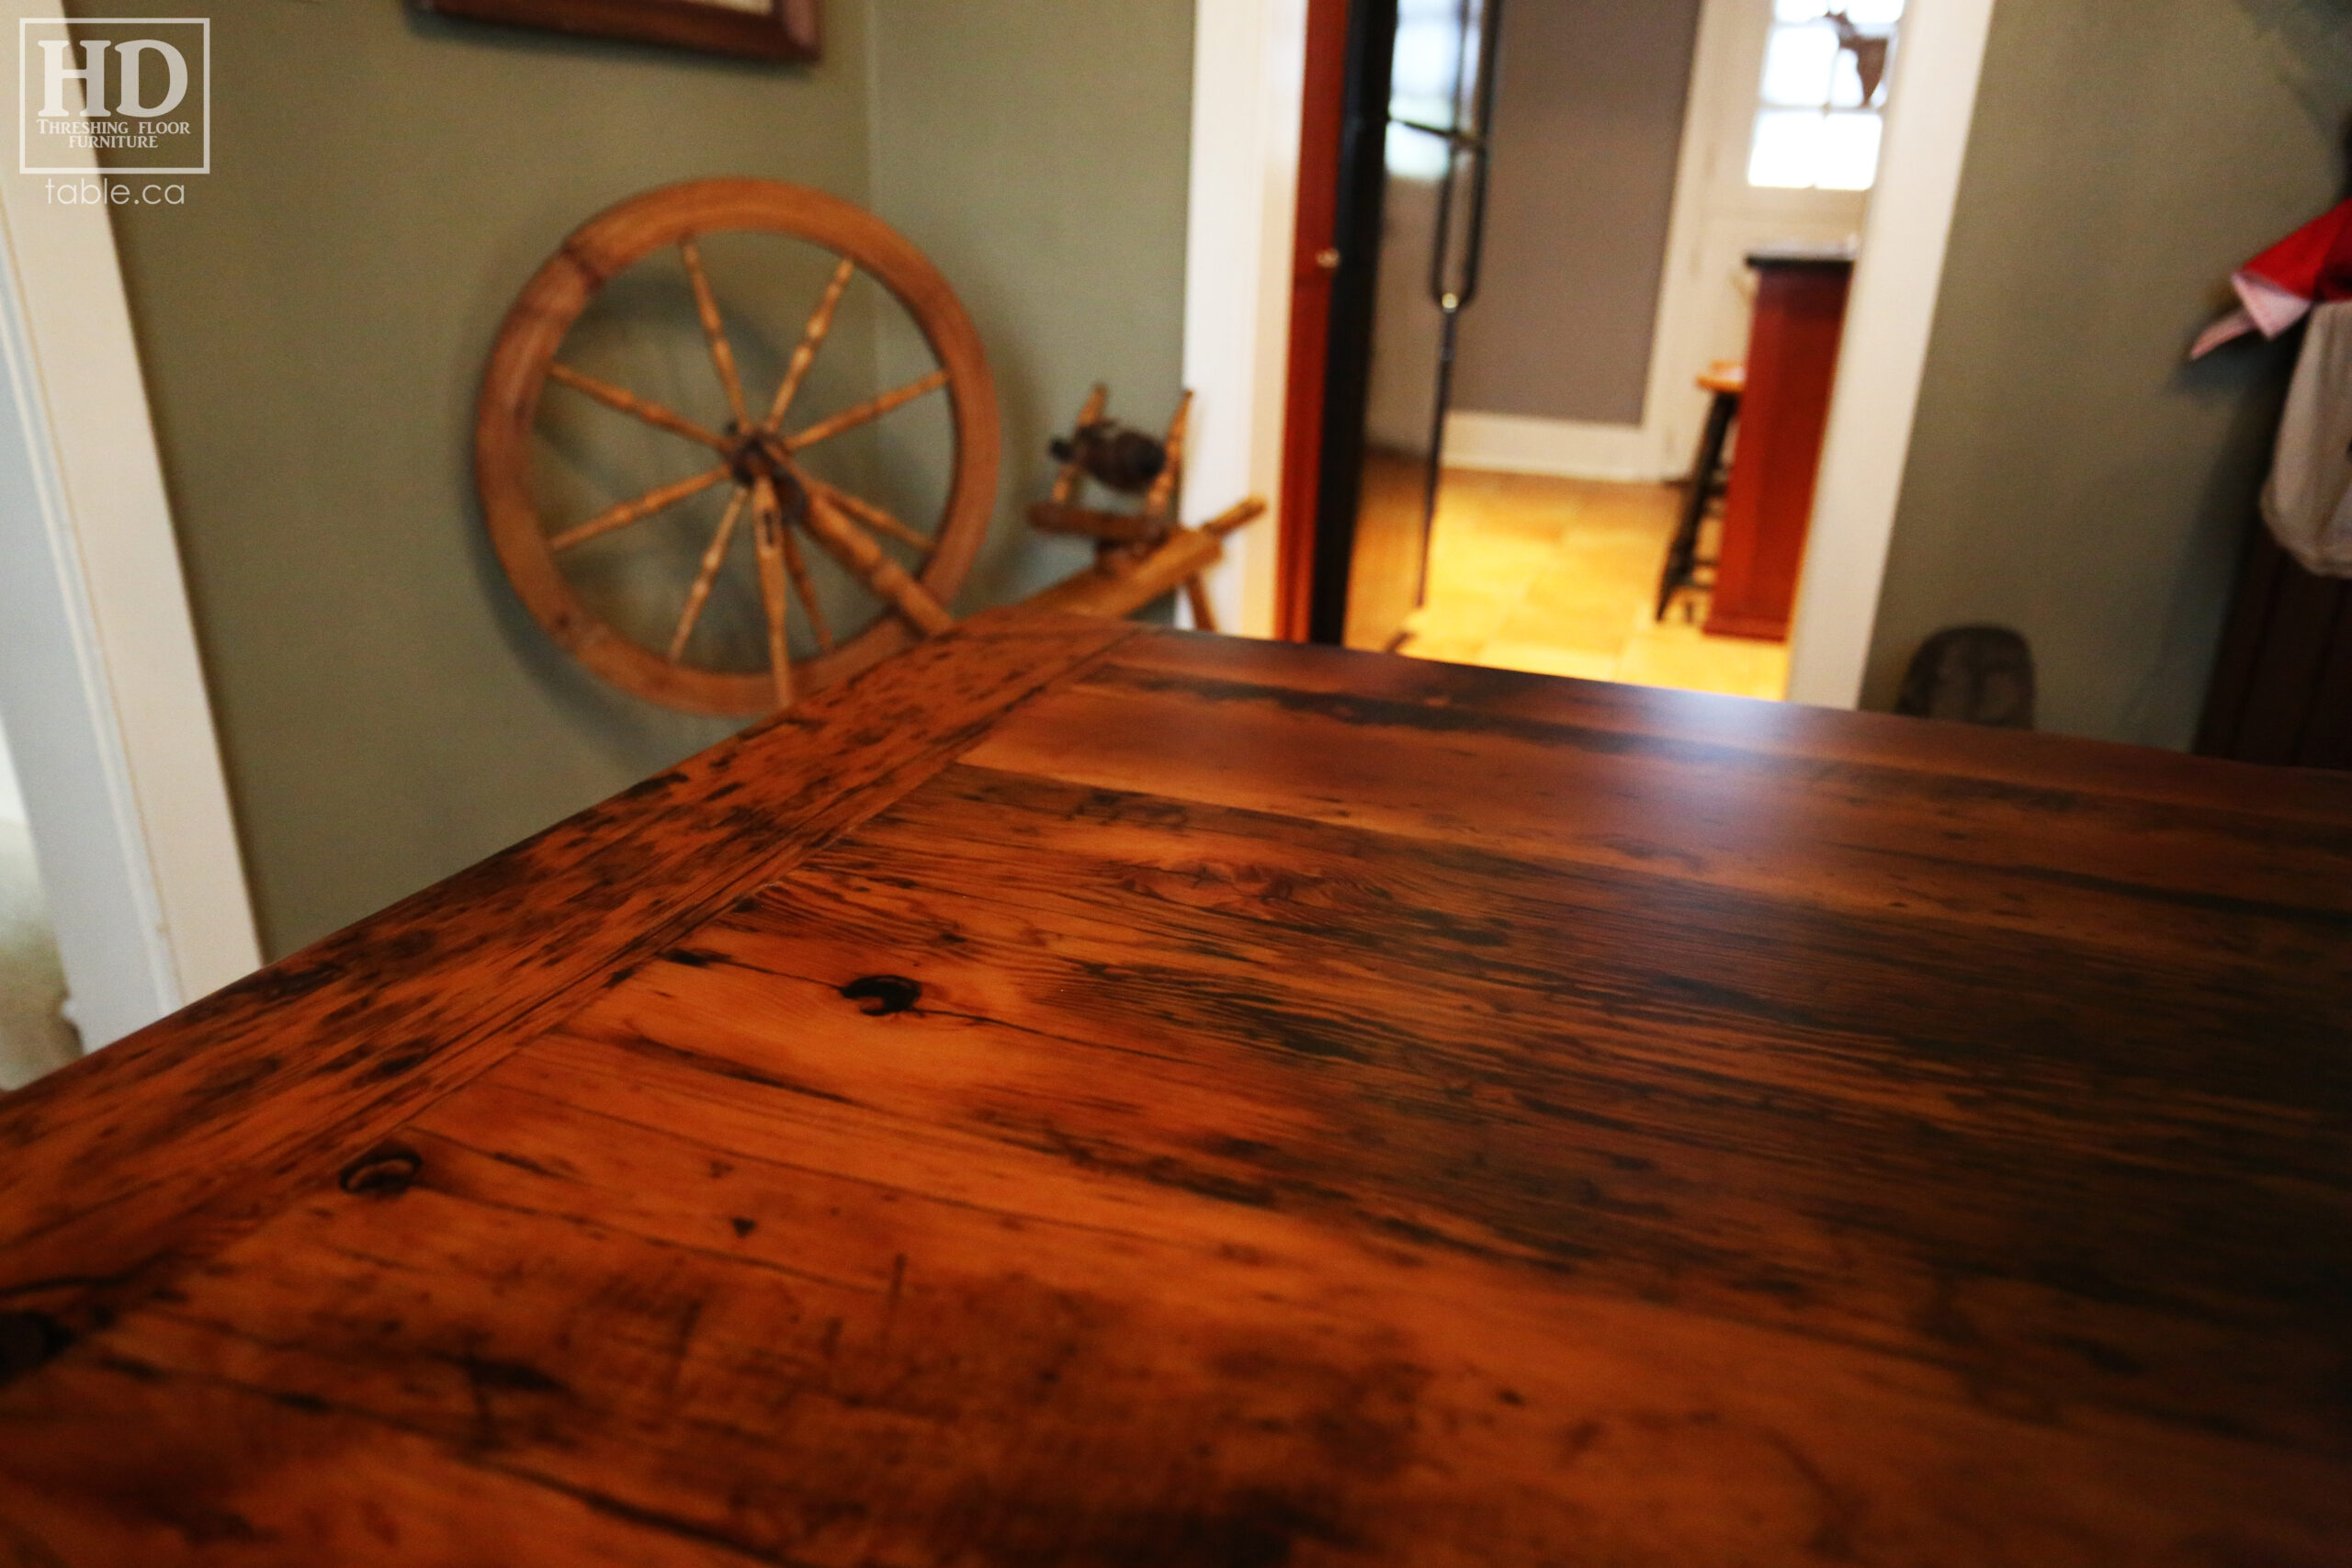 Custom Reclaimed Wood Table by HD Threshing Floor Furniture / www.table.ca